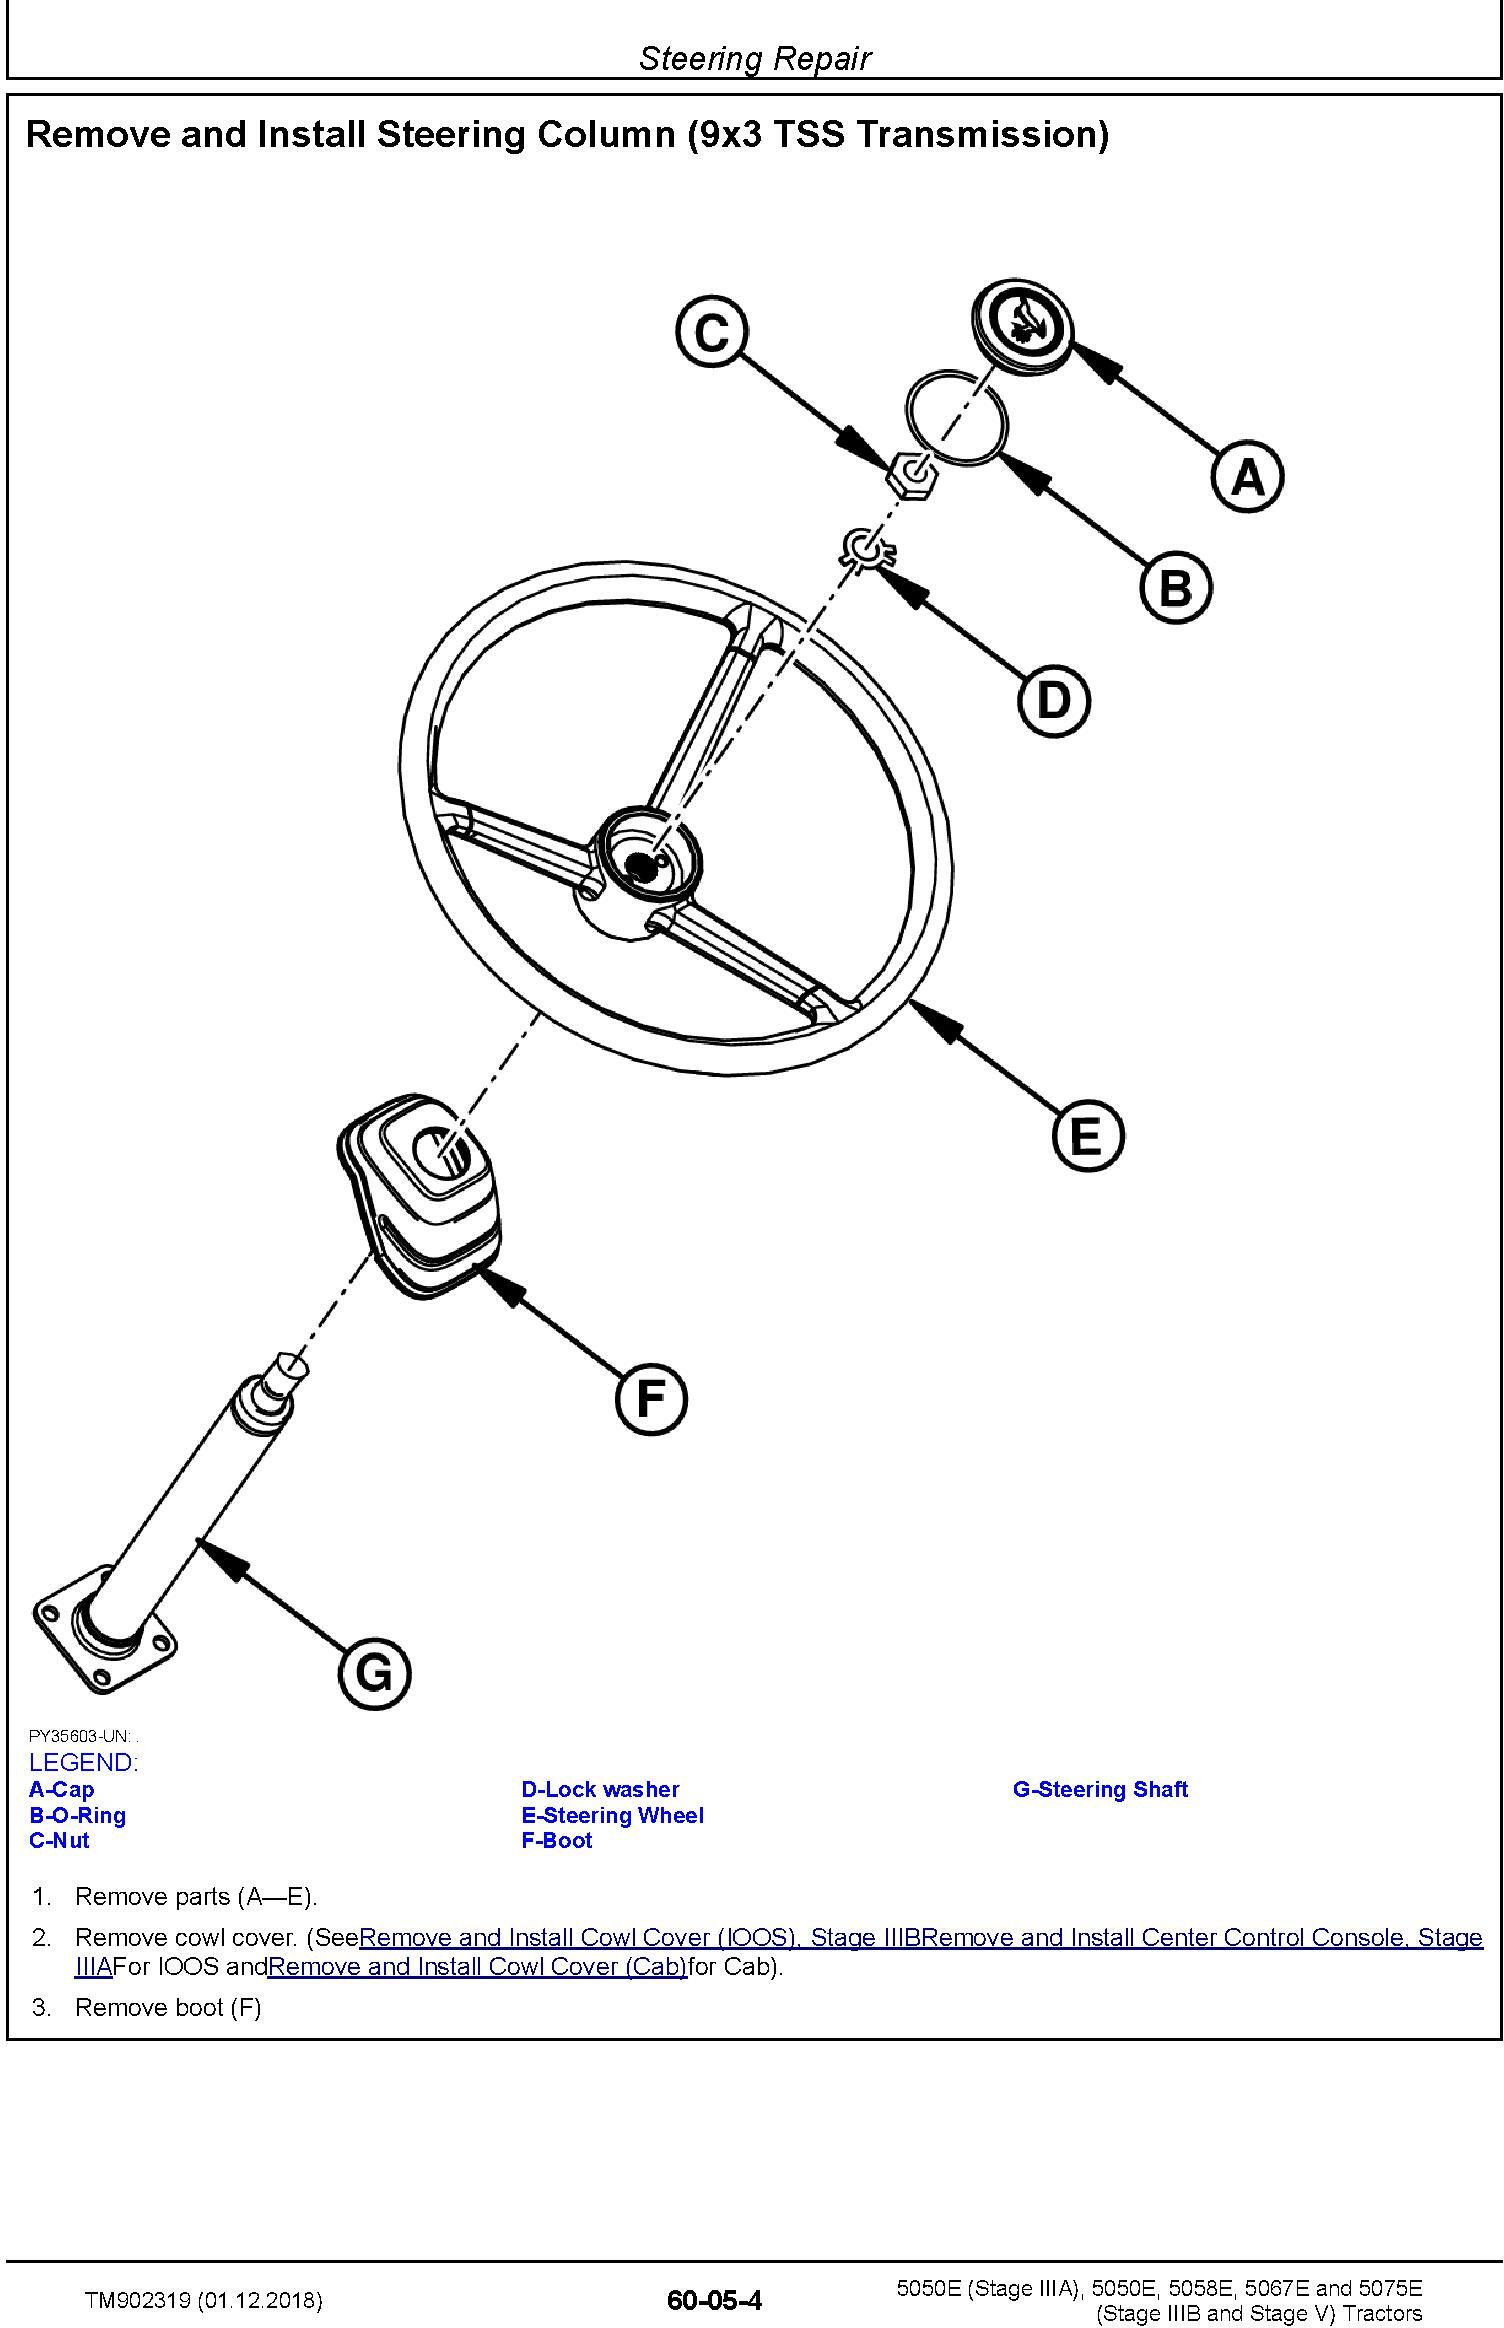 John Deere 5050E, 5050E, 5058E, 5067E, 5075E Tractors Service Repair Technical Manual (TM902319) - 3